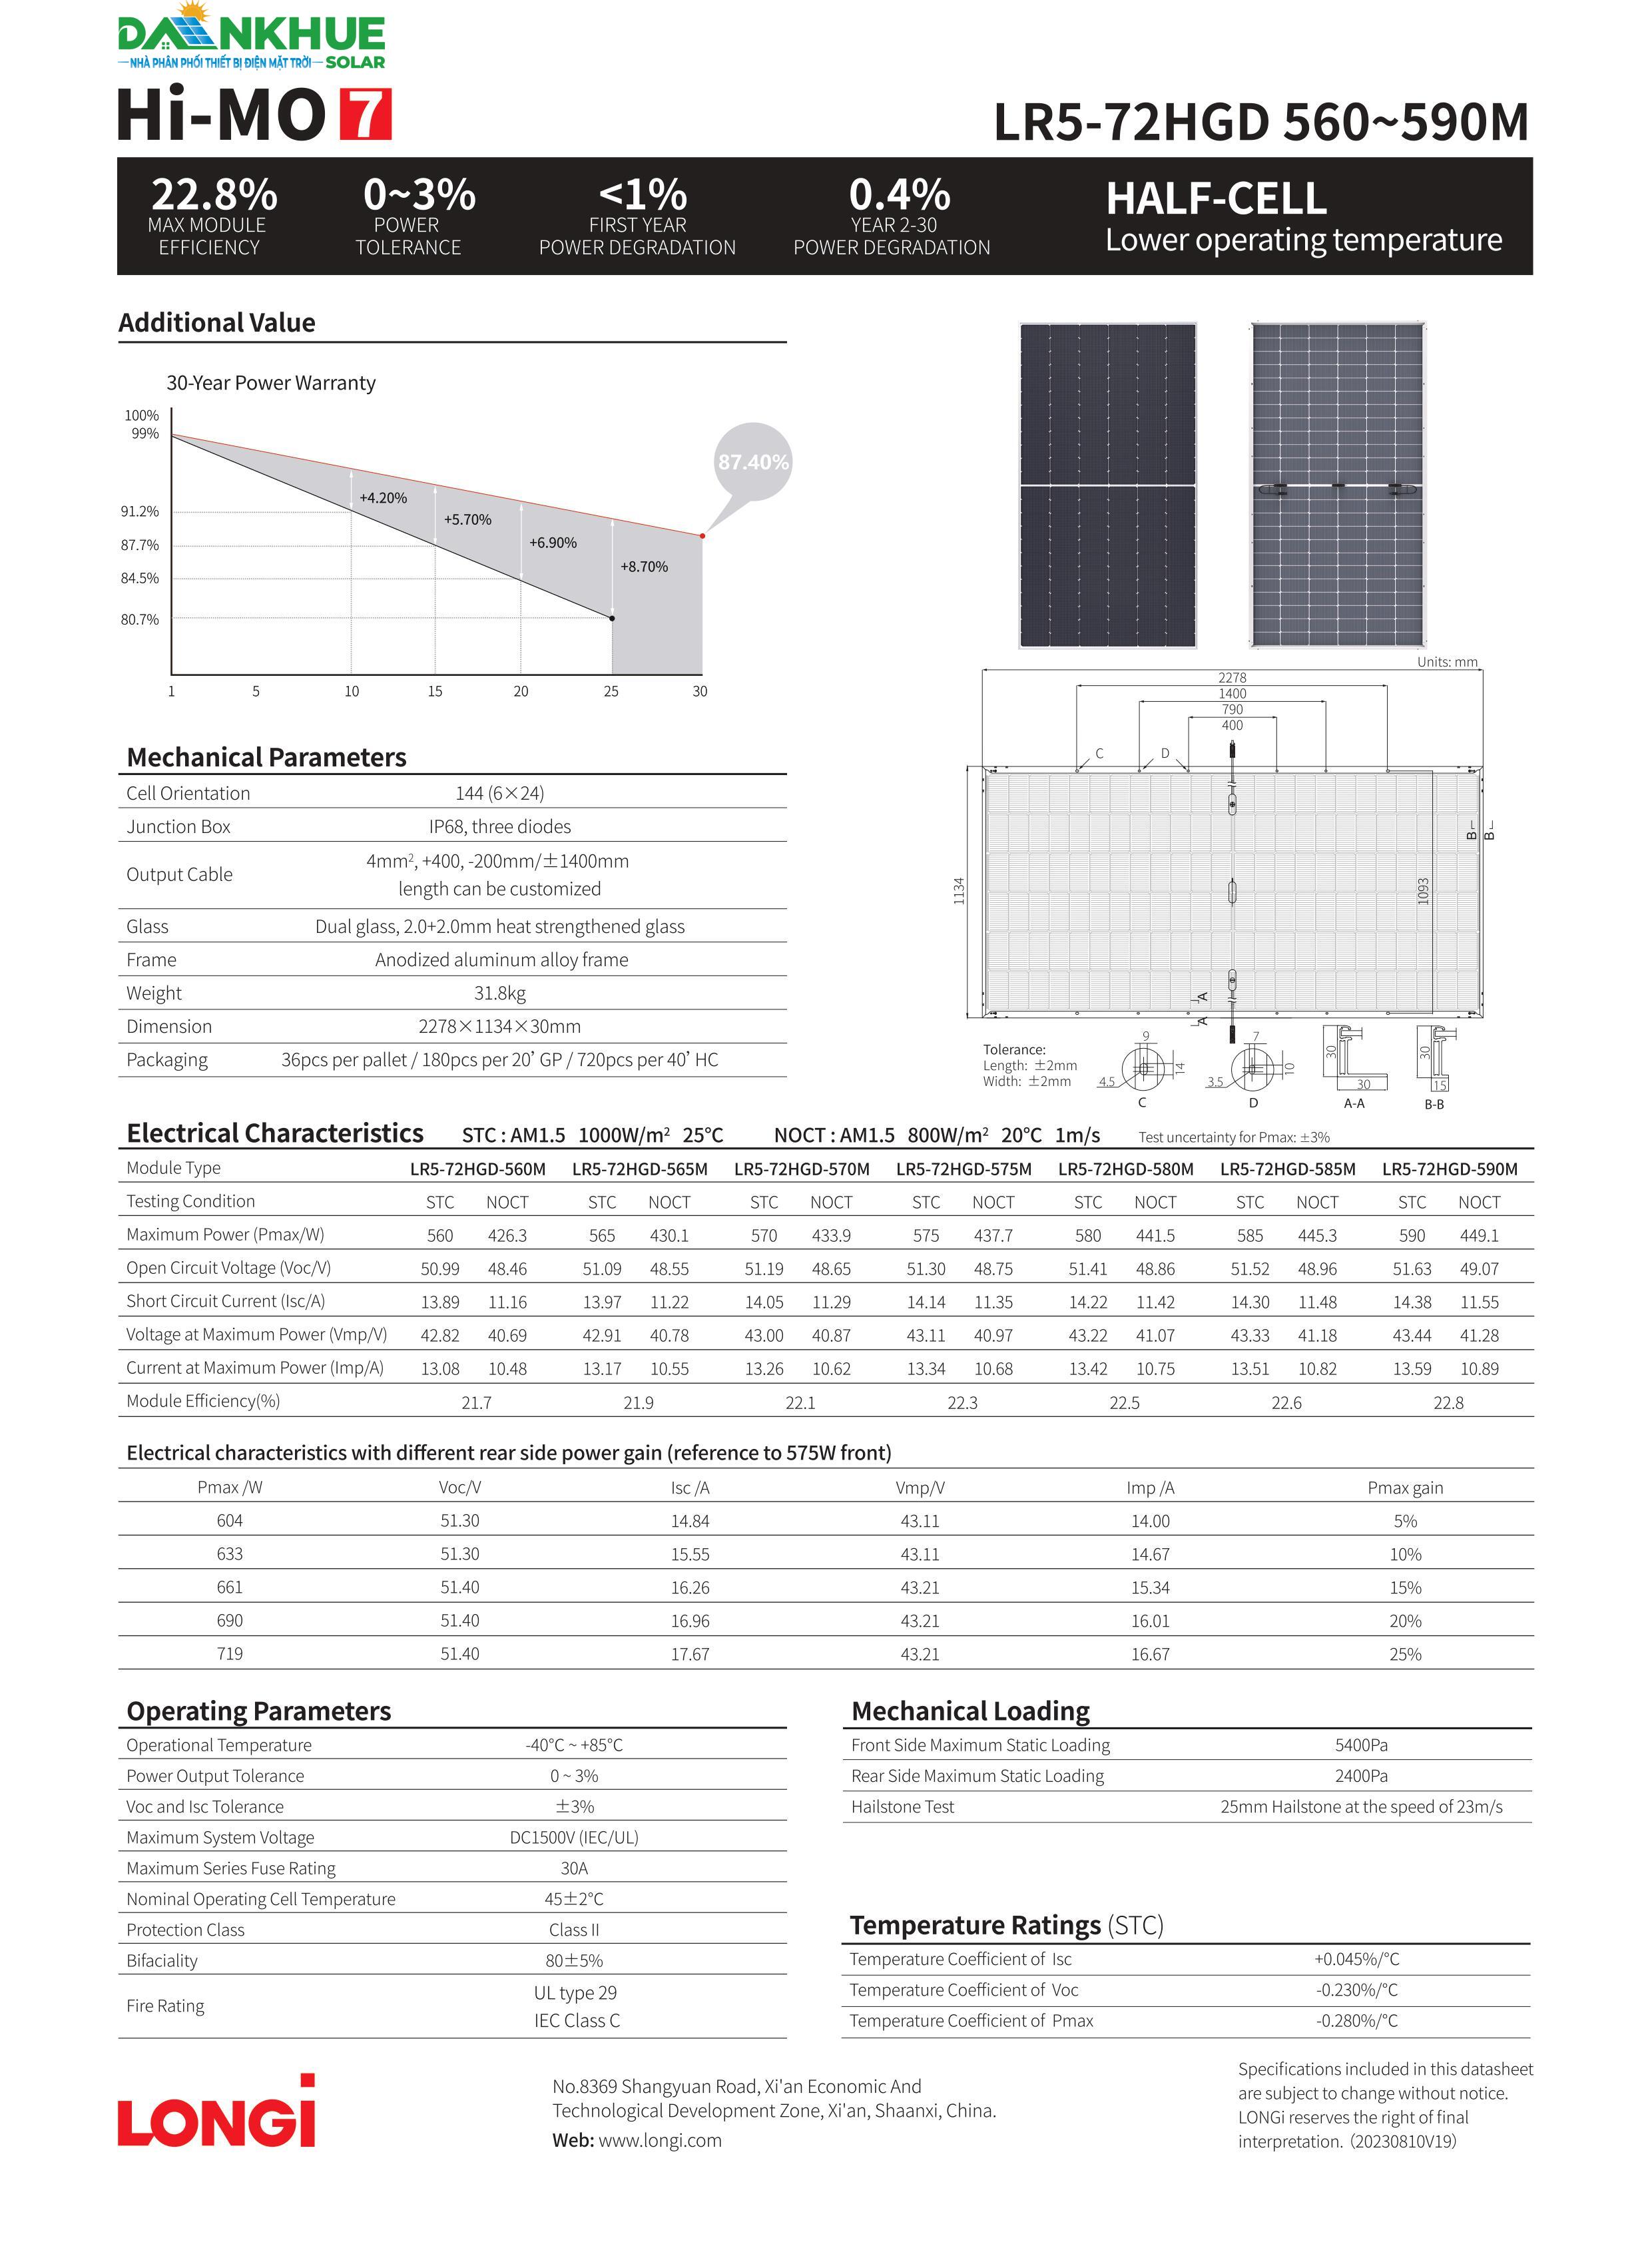 Datasheet thông số kỹ thuật tấm pin mặt trời Longi LR5-72HGD 560-590w Hi-Mo 7